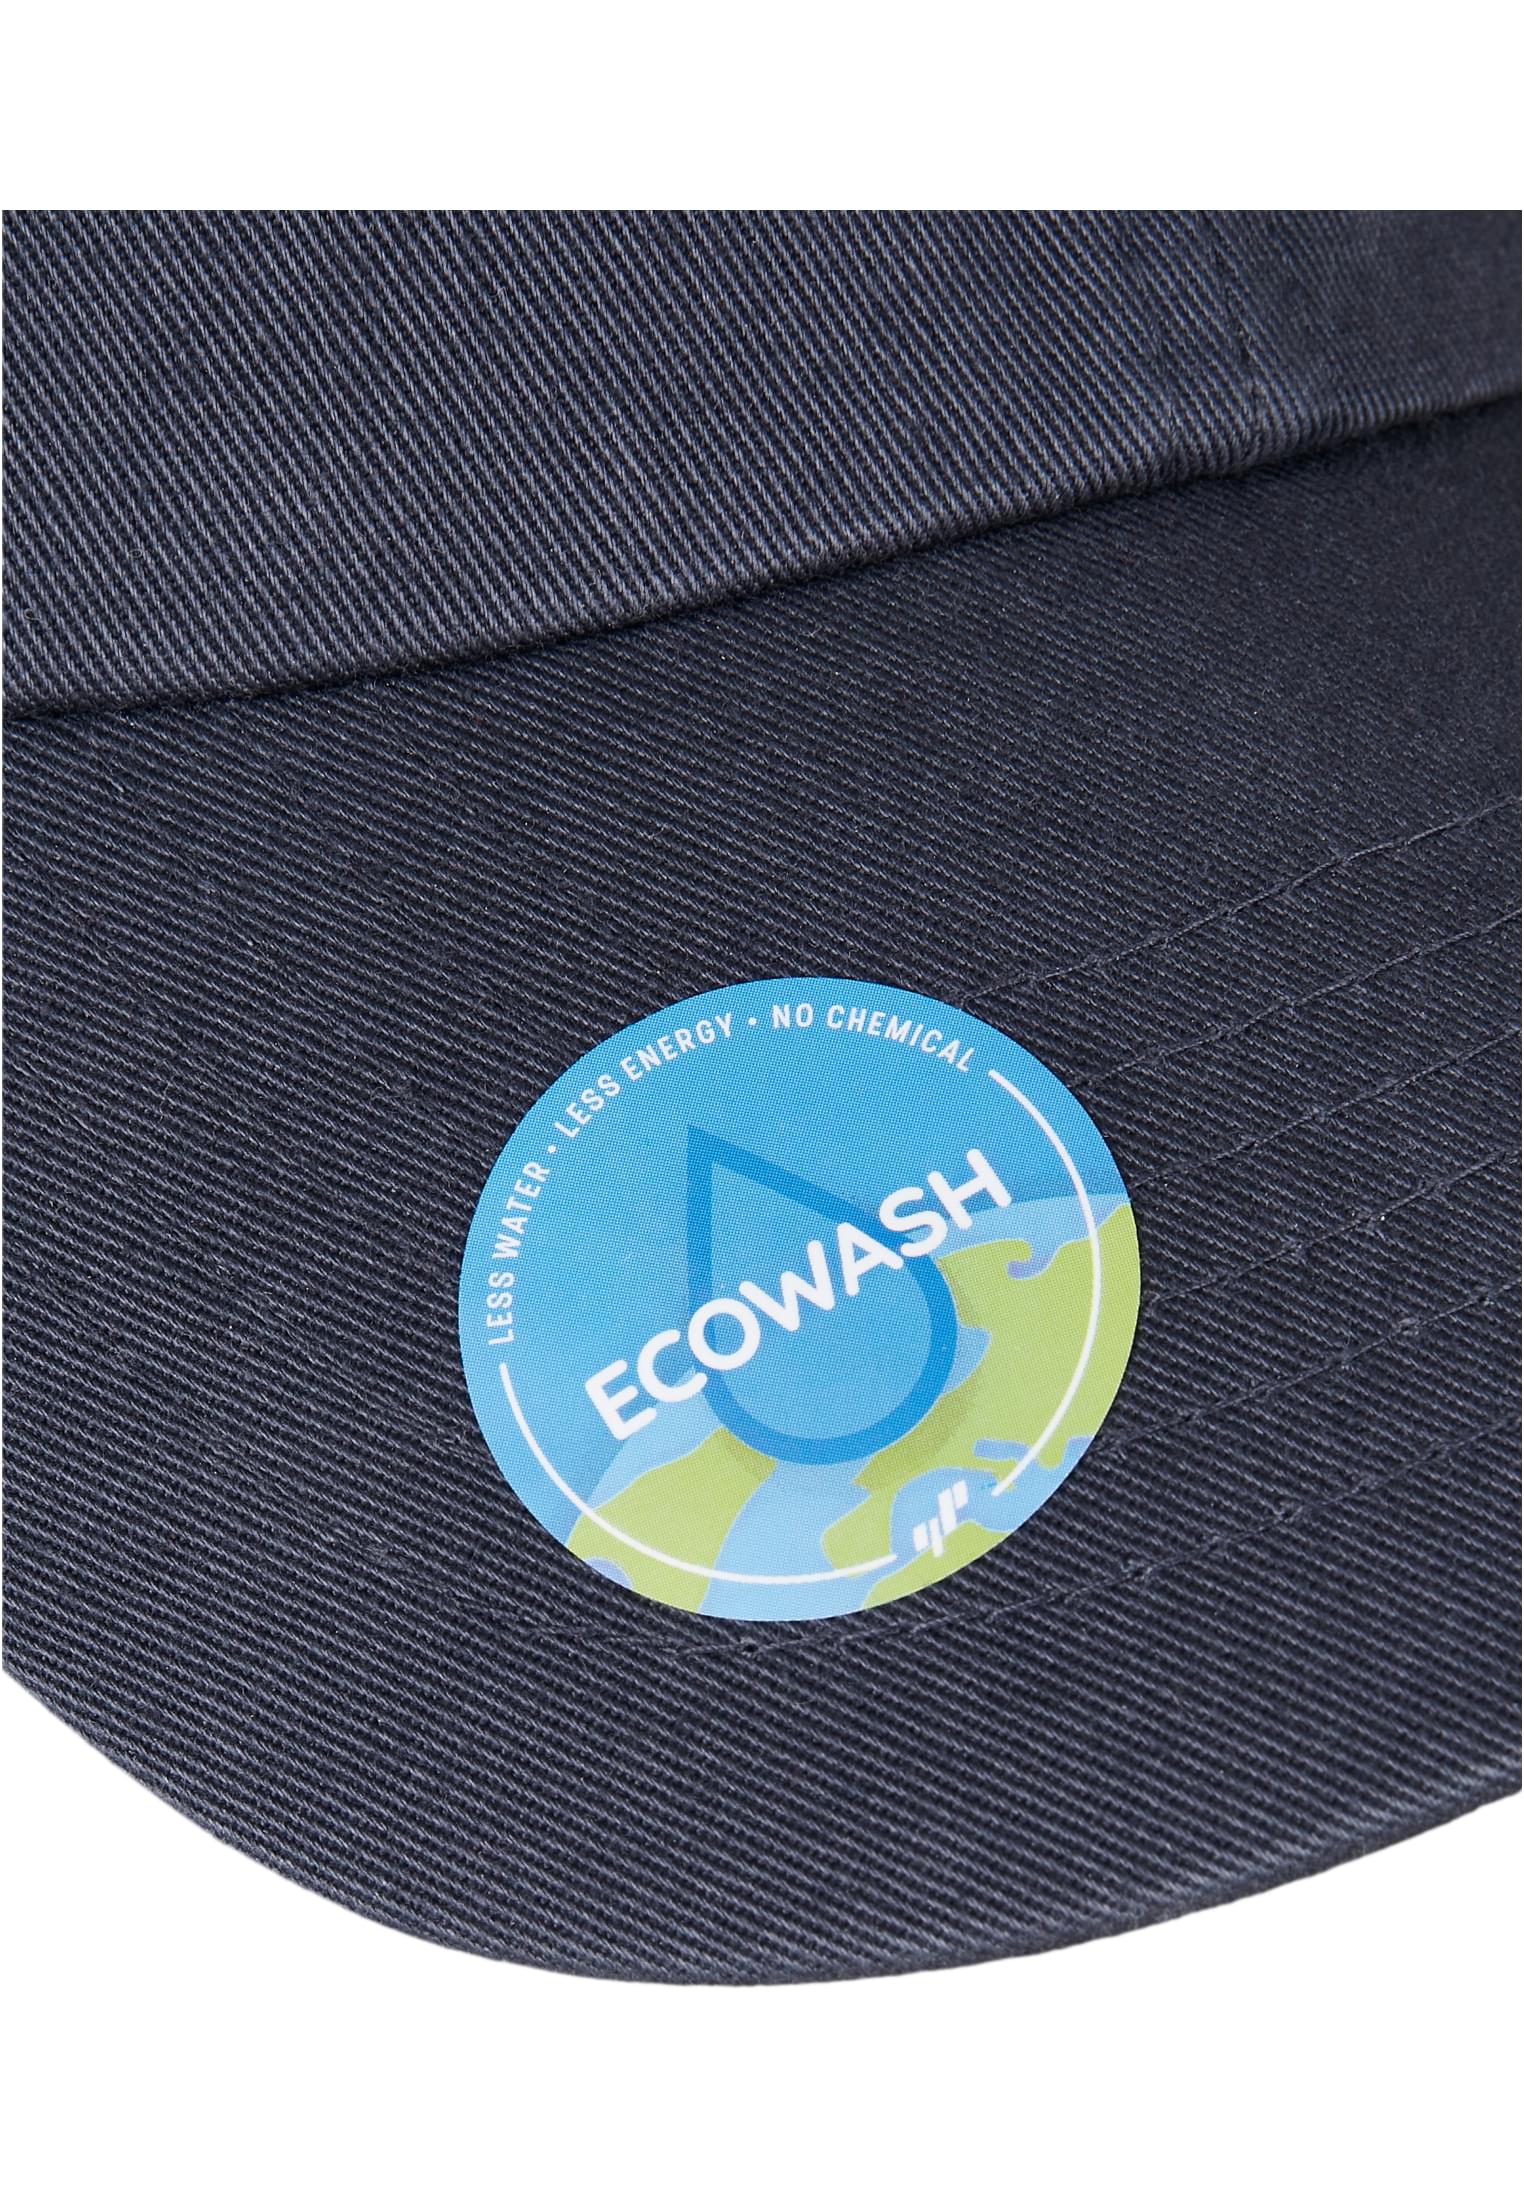 Ecowash Cap-6245EC Dad